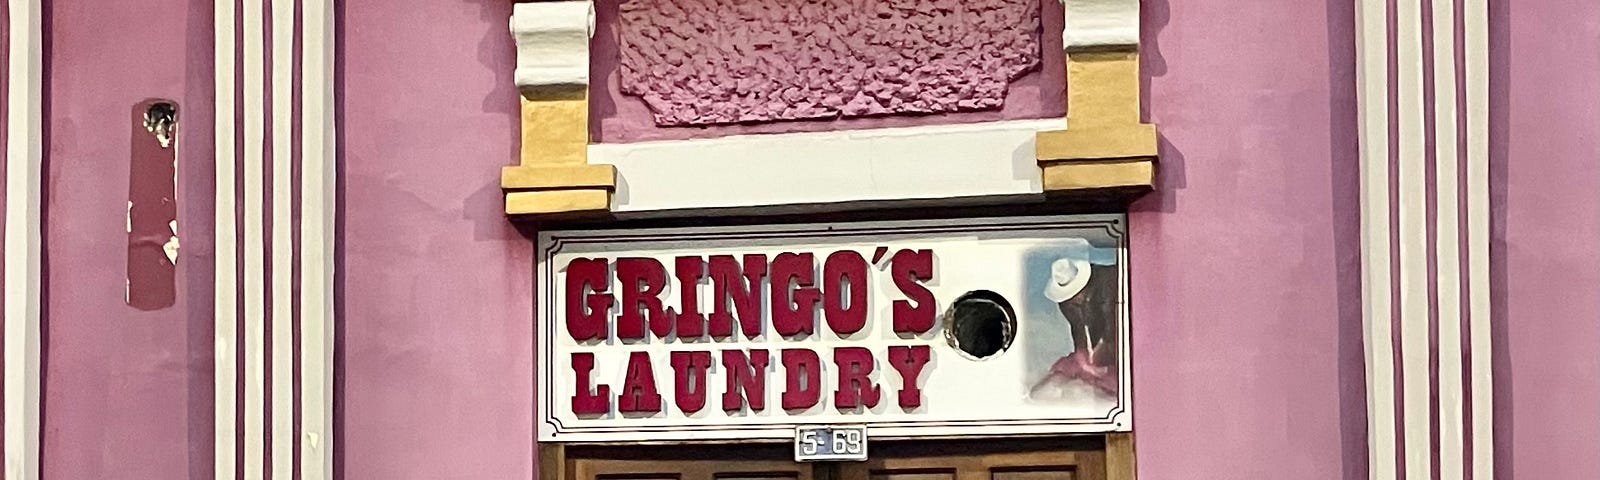 A laundry shop called Gringo’s Laundry in Cuenca, Ecuador (author’s photo)